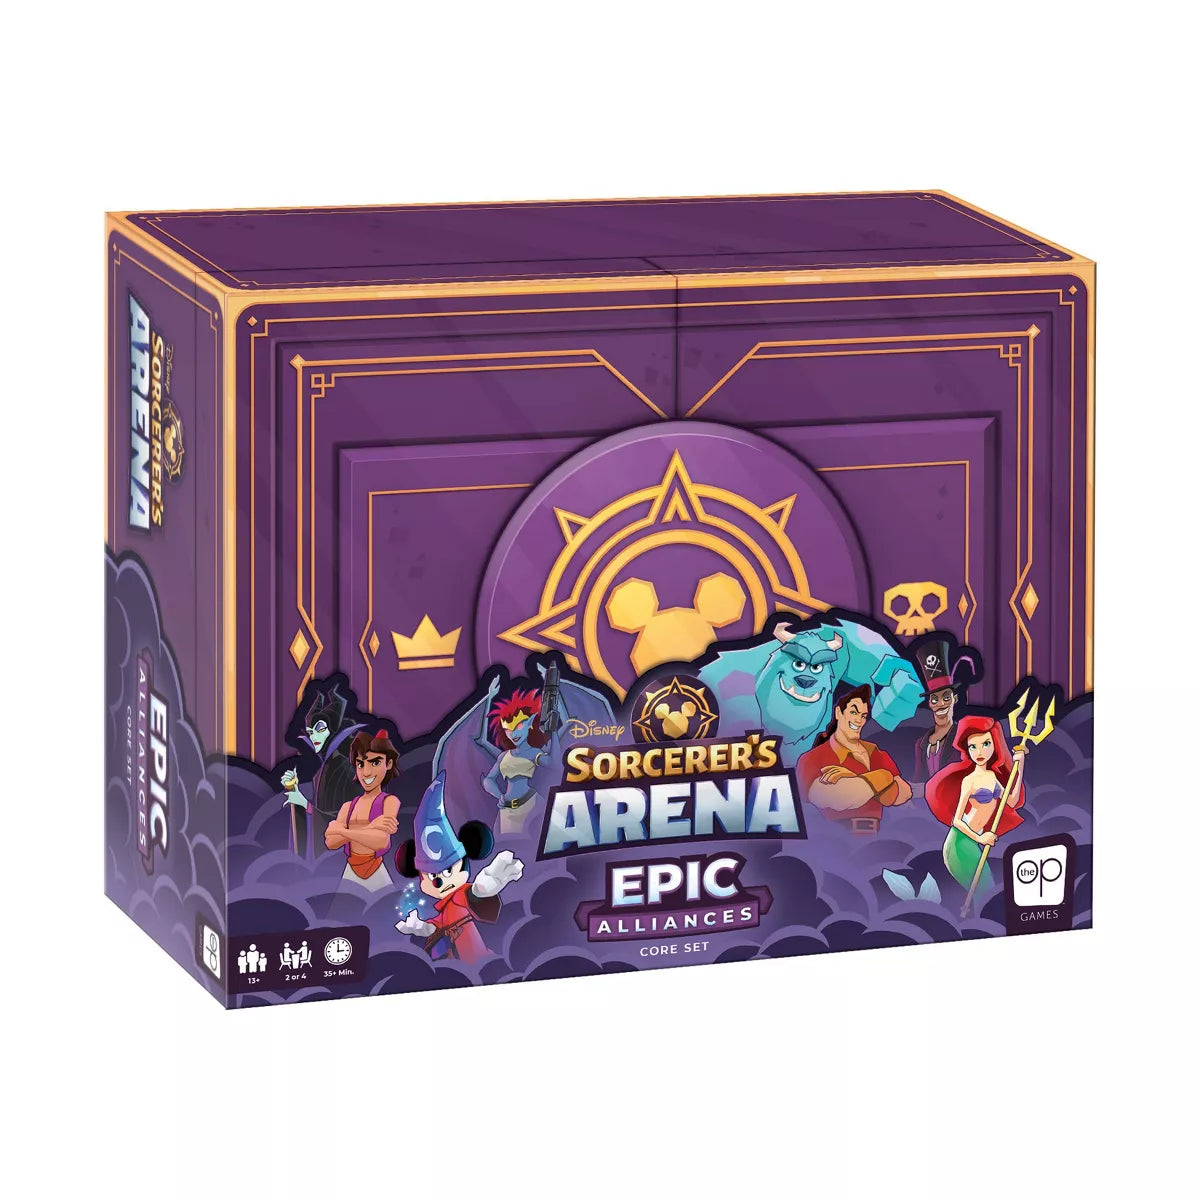 The Op Games Disney Sorcerer's Arena: Epic Alliances Core Set Board Game